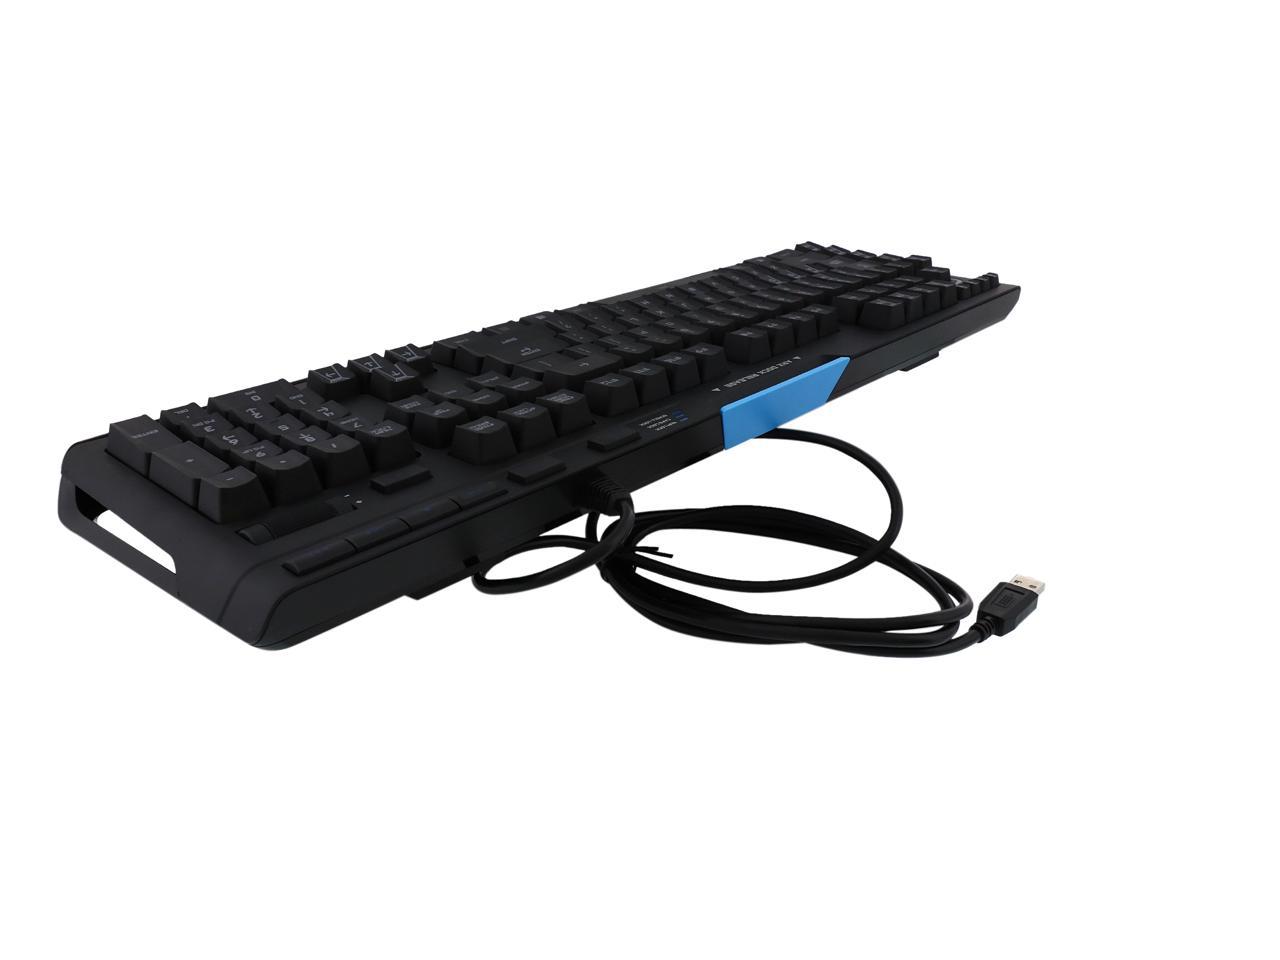 Refurbished: Recertified - G910 Orion Mechanical Gaming Keyboard - Black - Newegg.com